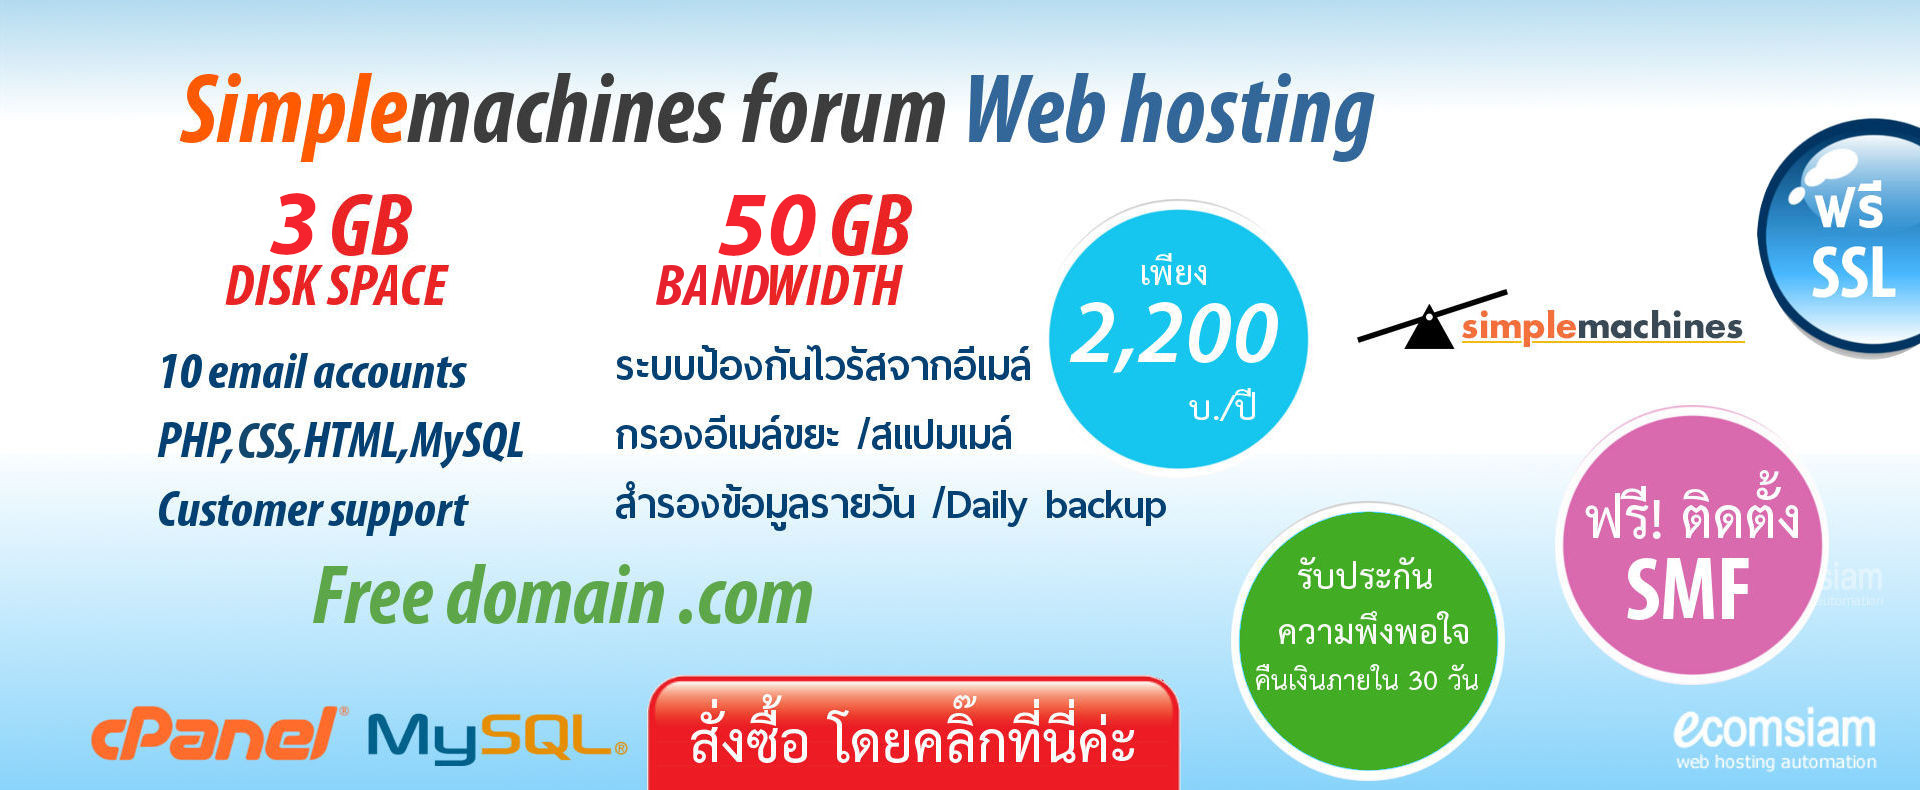 web hosting thai แนะนำ smf : simple machines forum web hosting thailand เพียง 2,200 บ./ปี เว็บโฮสติ้งไทย ฟรี โดเมน ฟรี SSL ฟรีติดตั้ง แนะนำเว็บโฮสติ้ง บริการลูกค้า  Support ดูแลดี โดย thailandwebhost.com - smf : simple machines forum web hosting thailand free domain